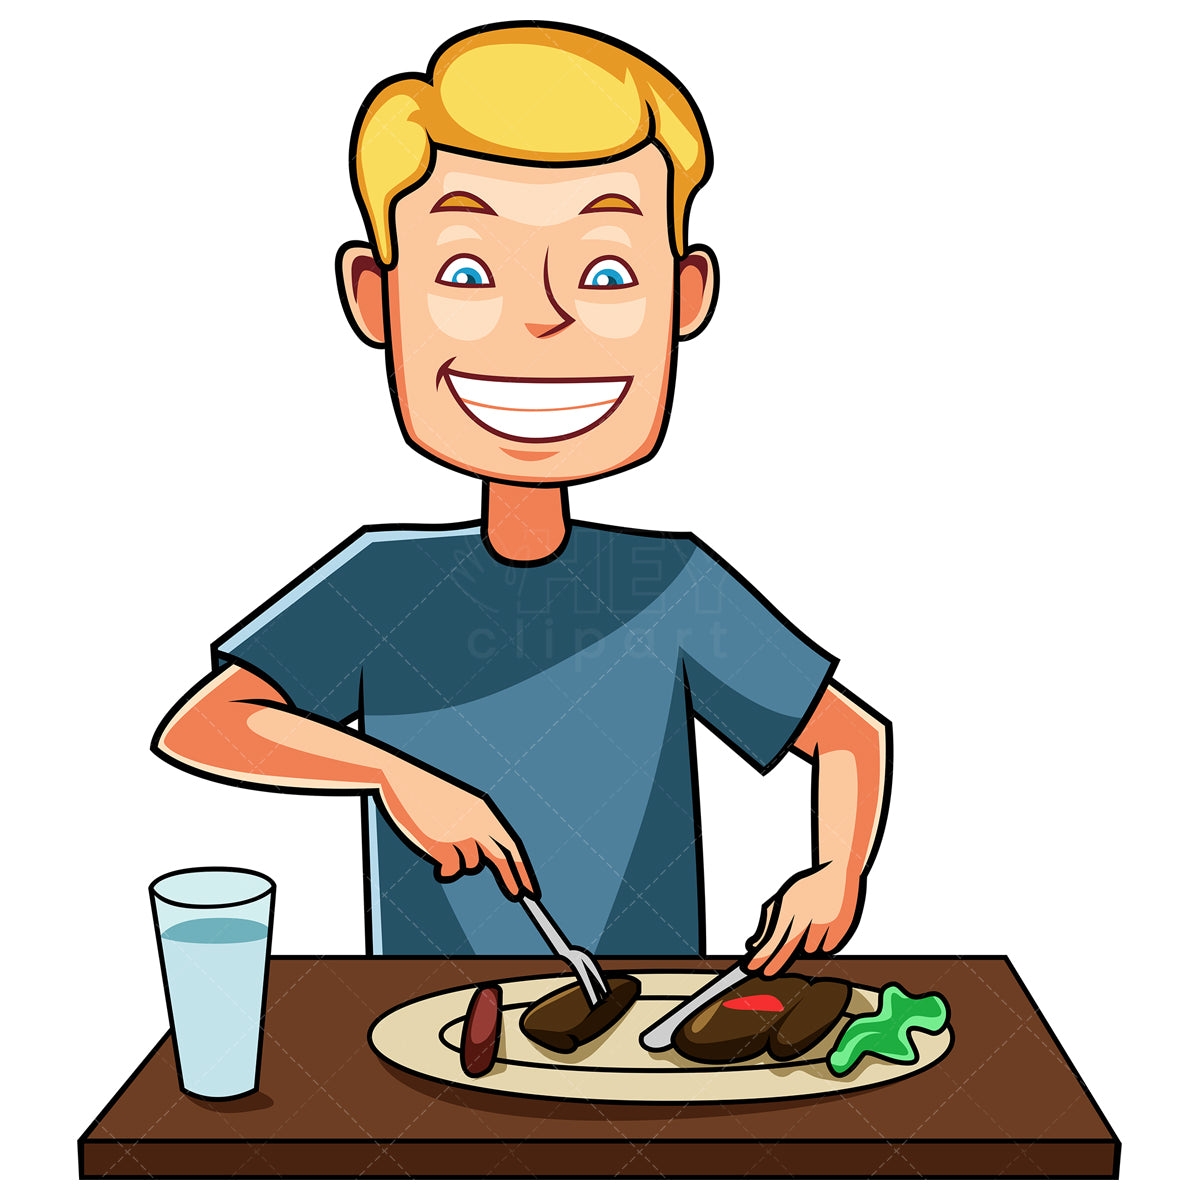 Royalty-free stock vector illustration of a man enjoying meal.